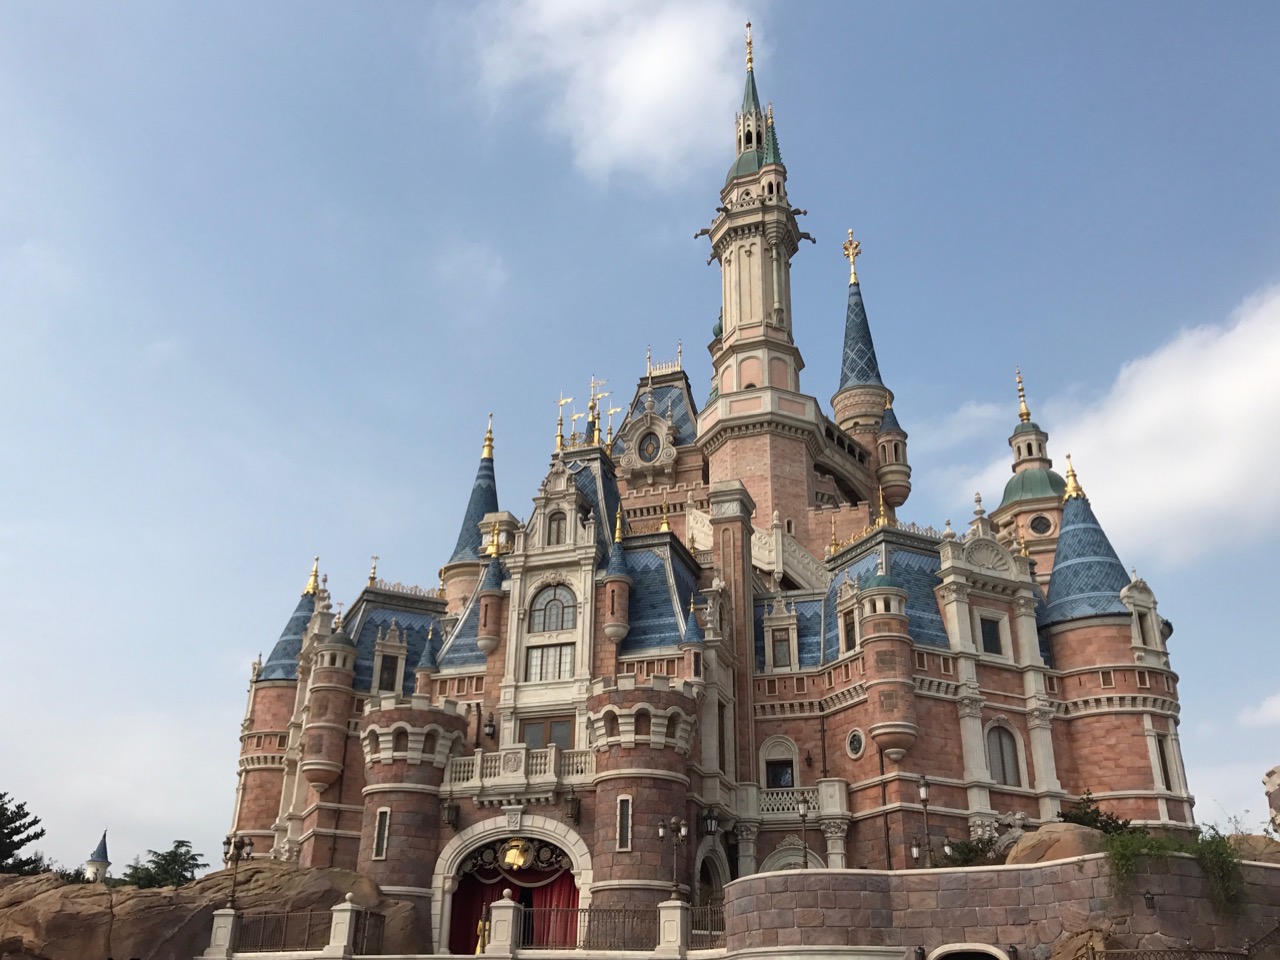 Disneyland Paris Castle 2023 Guide: History, Architecture & Fun Facts!